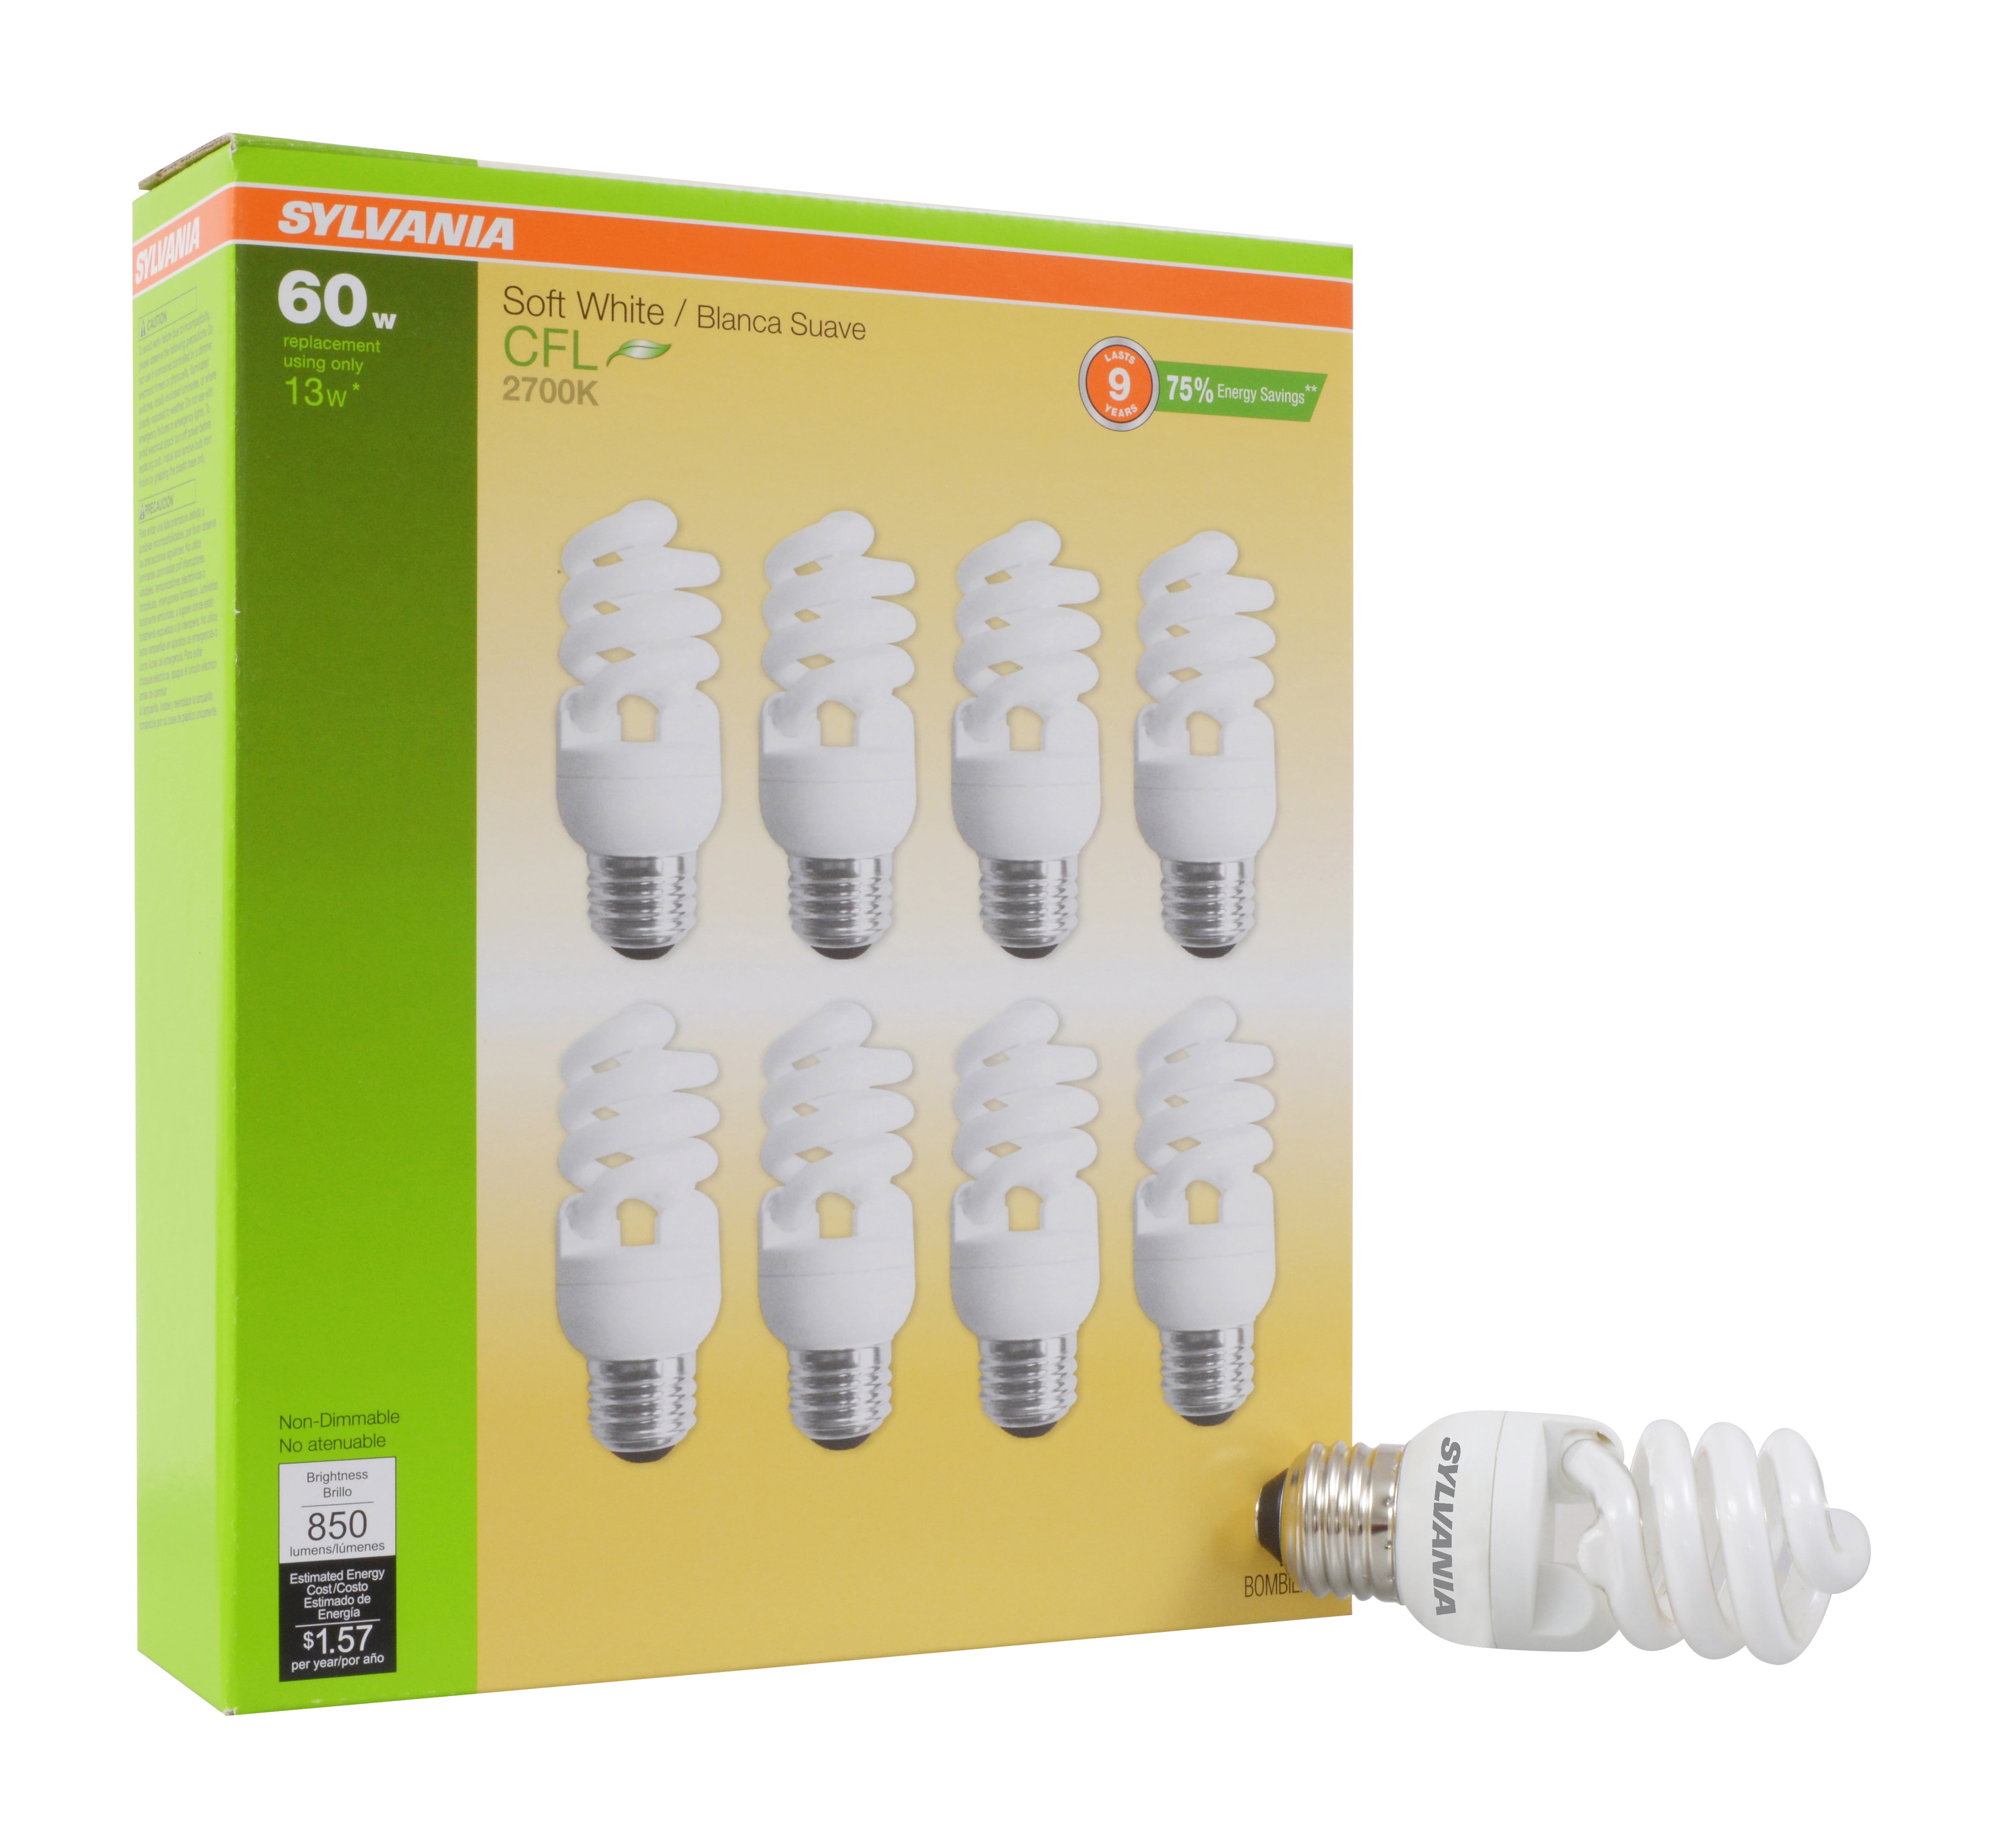 LEDVANCE Sylvania 2W LED Wedge T6 Bulb, 25W Hal. Retrofit, 160 lm, 12V,  3000K, Frosted (LEDVANCE Sylvania LED2/WEDGE/F/830/BL)